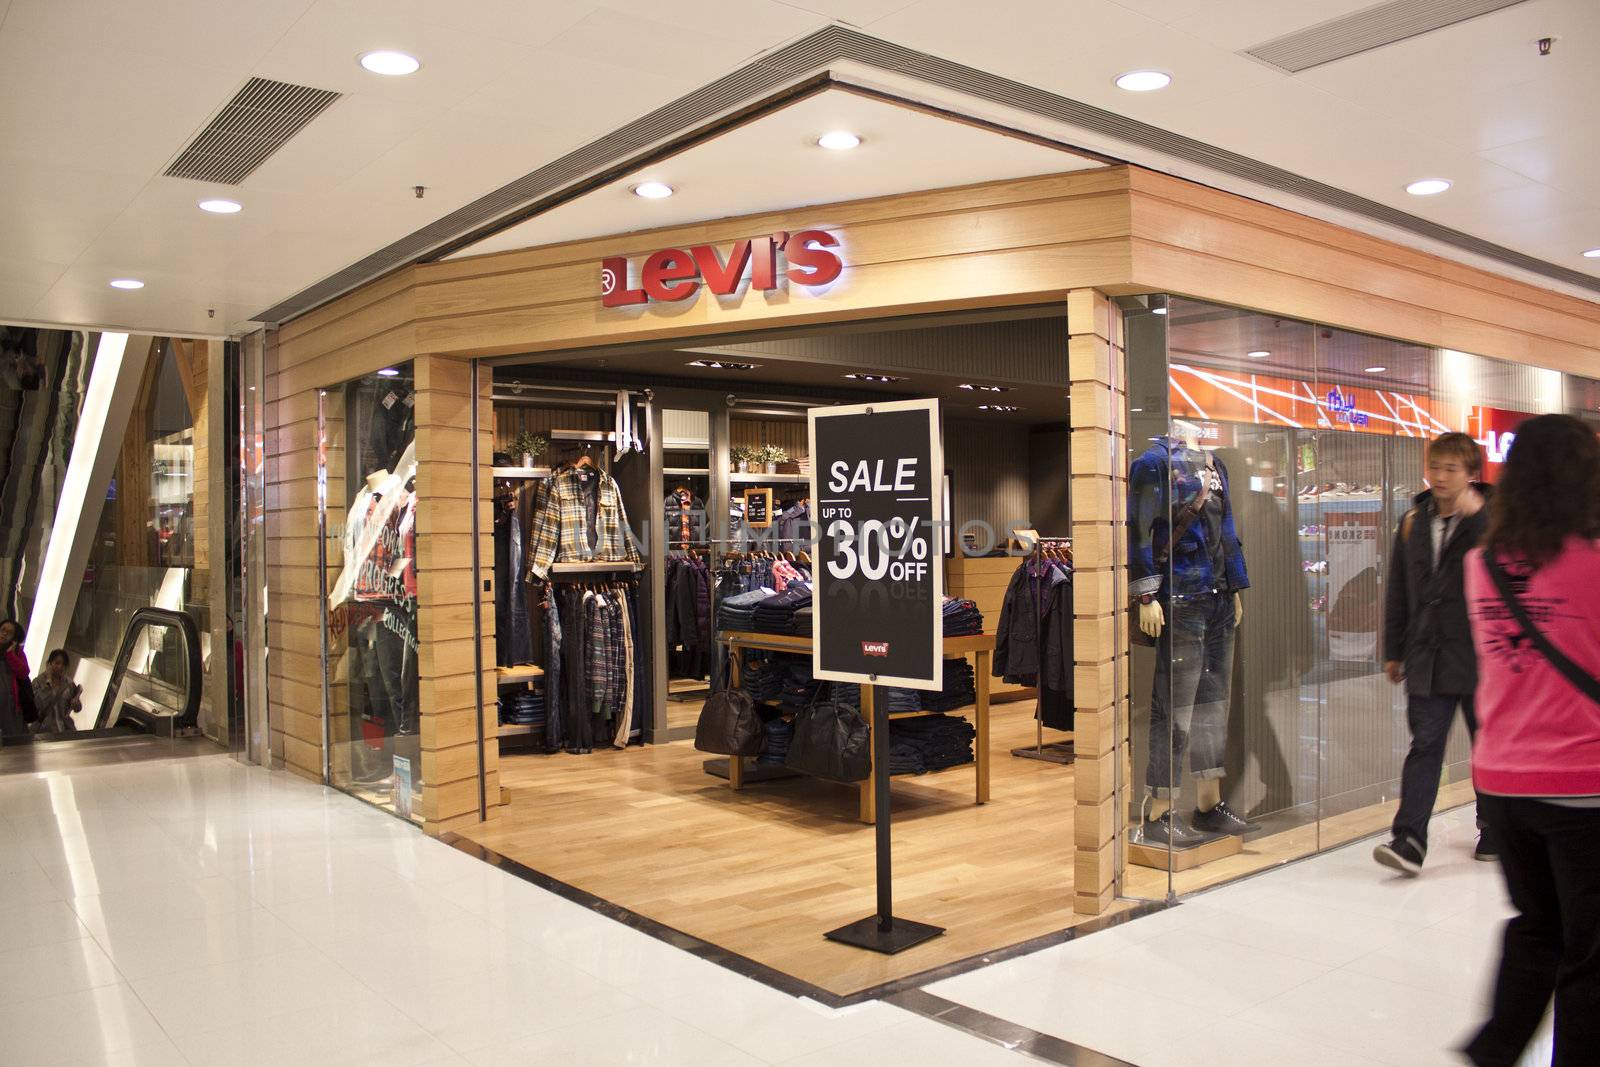 Levis shop in Hong Kong by kawing921